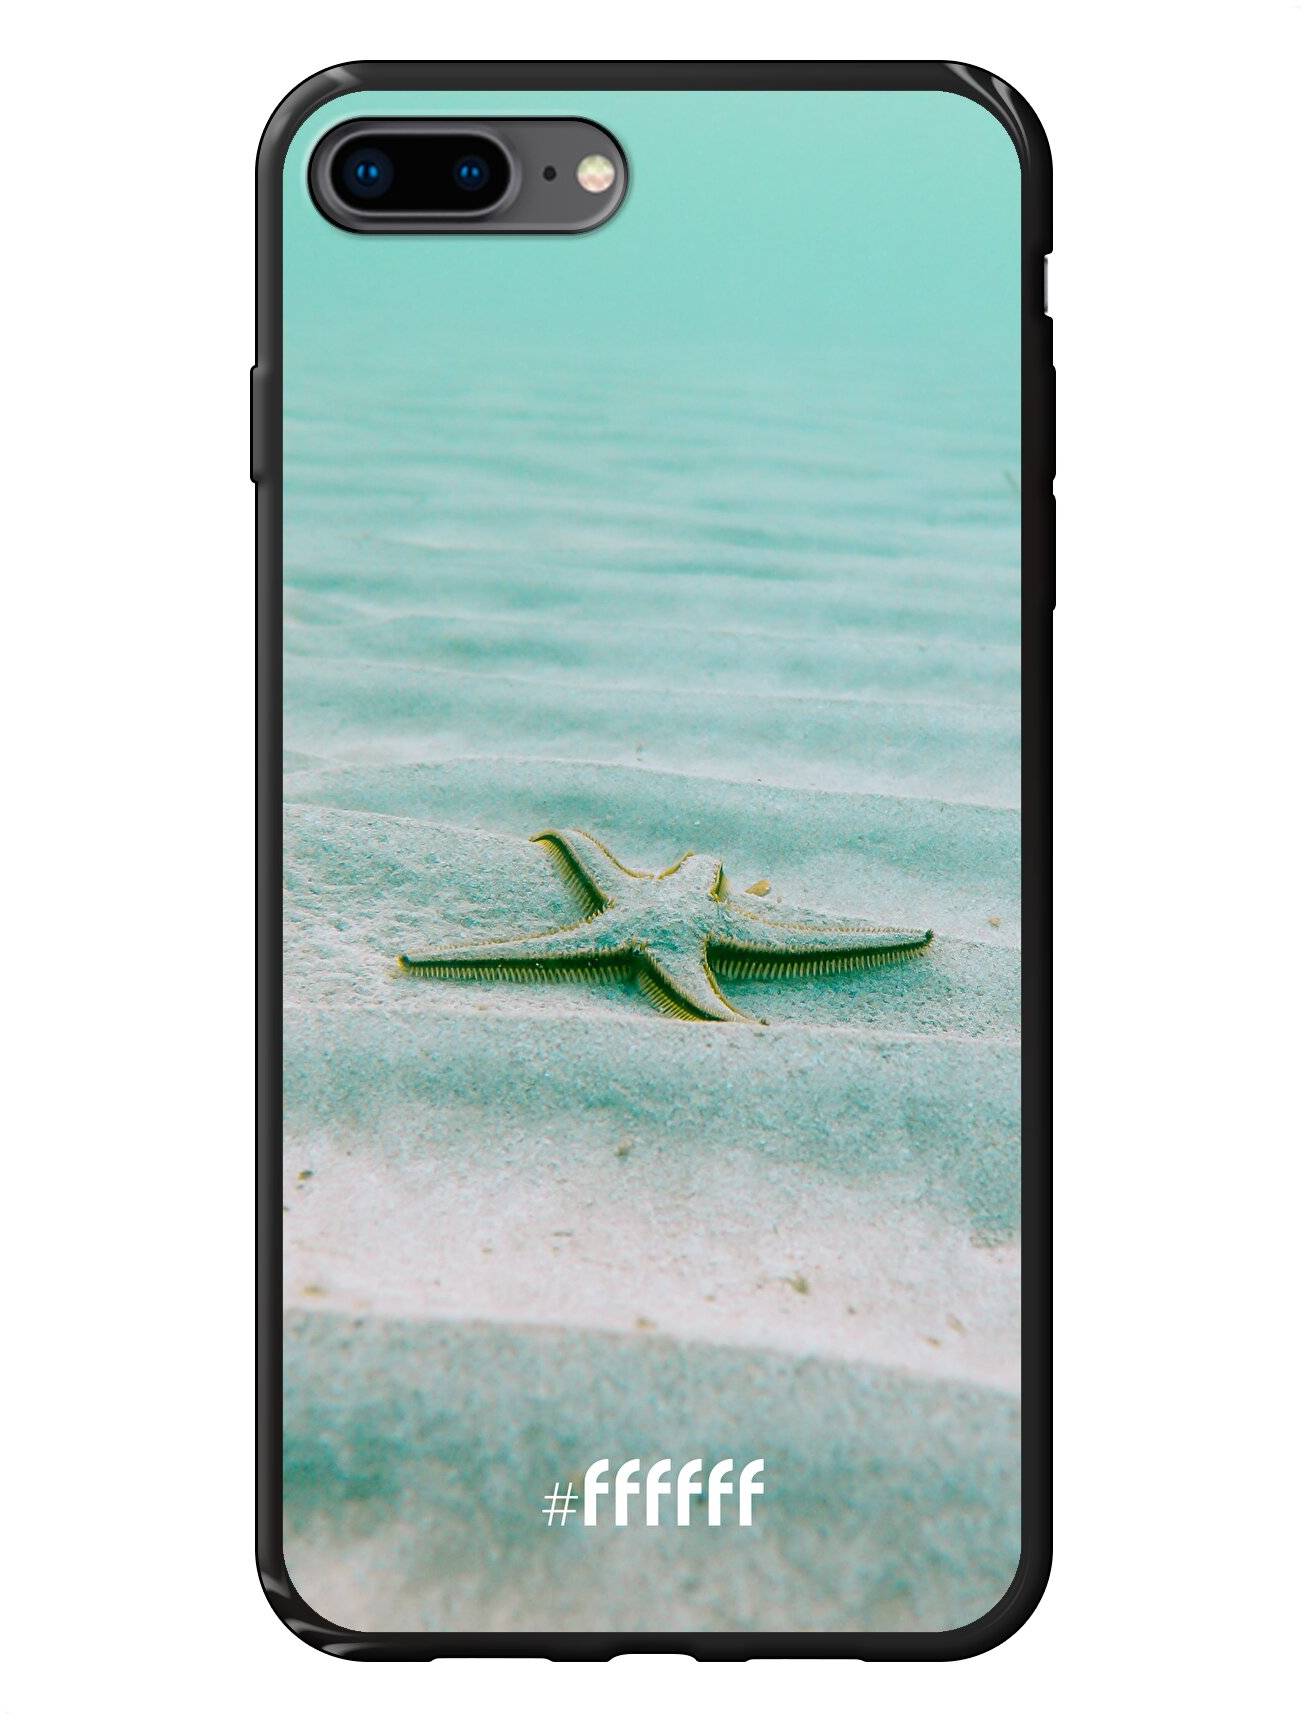 Sea Star iPhone 7 Plus